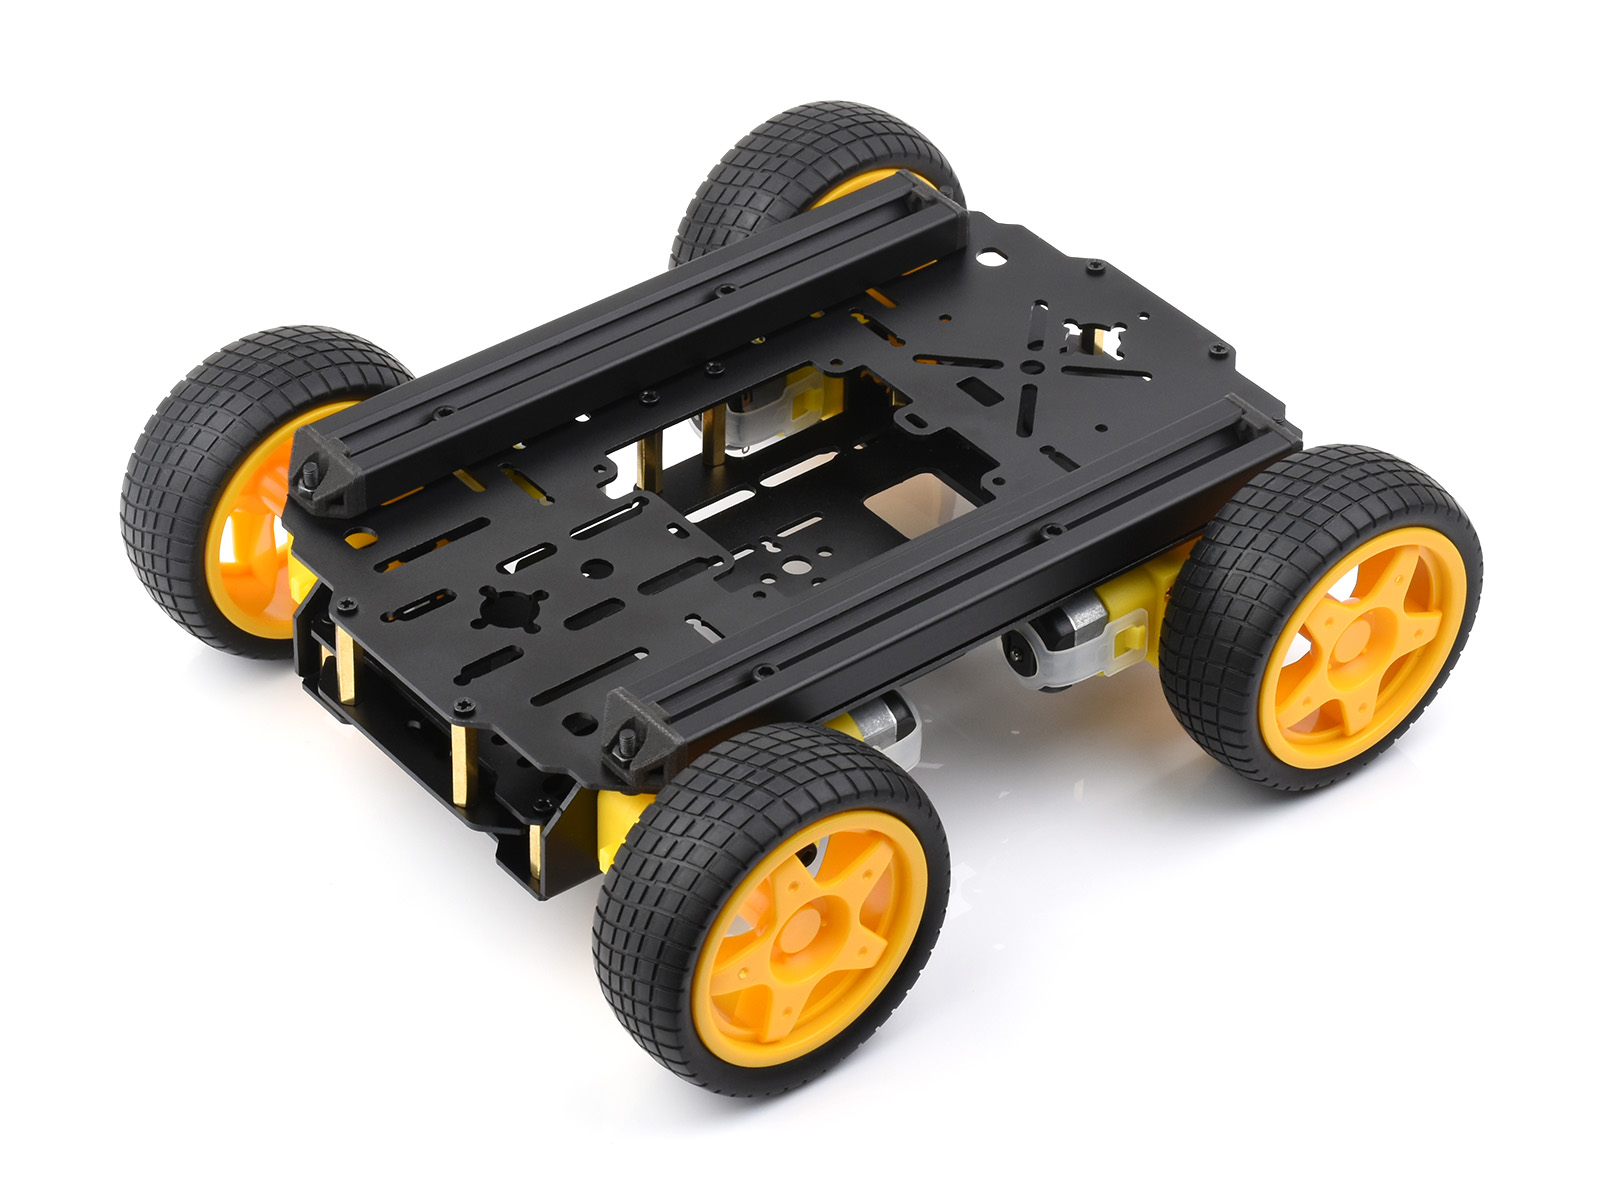 Robot-Chassis系列智能小车底盘NP型 普通车轮+带避震车身 轻量化减震滤震多层金属结构